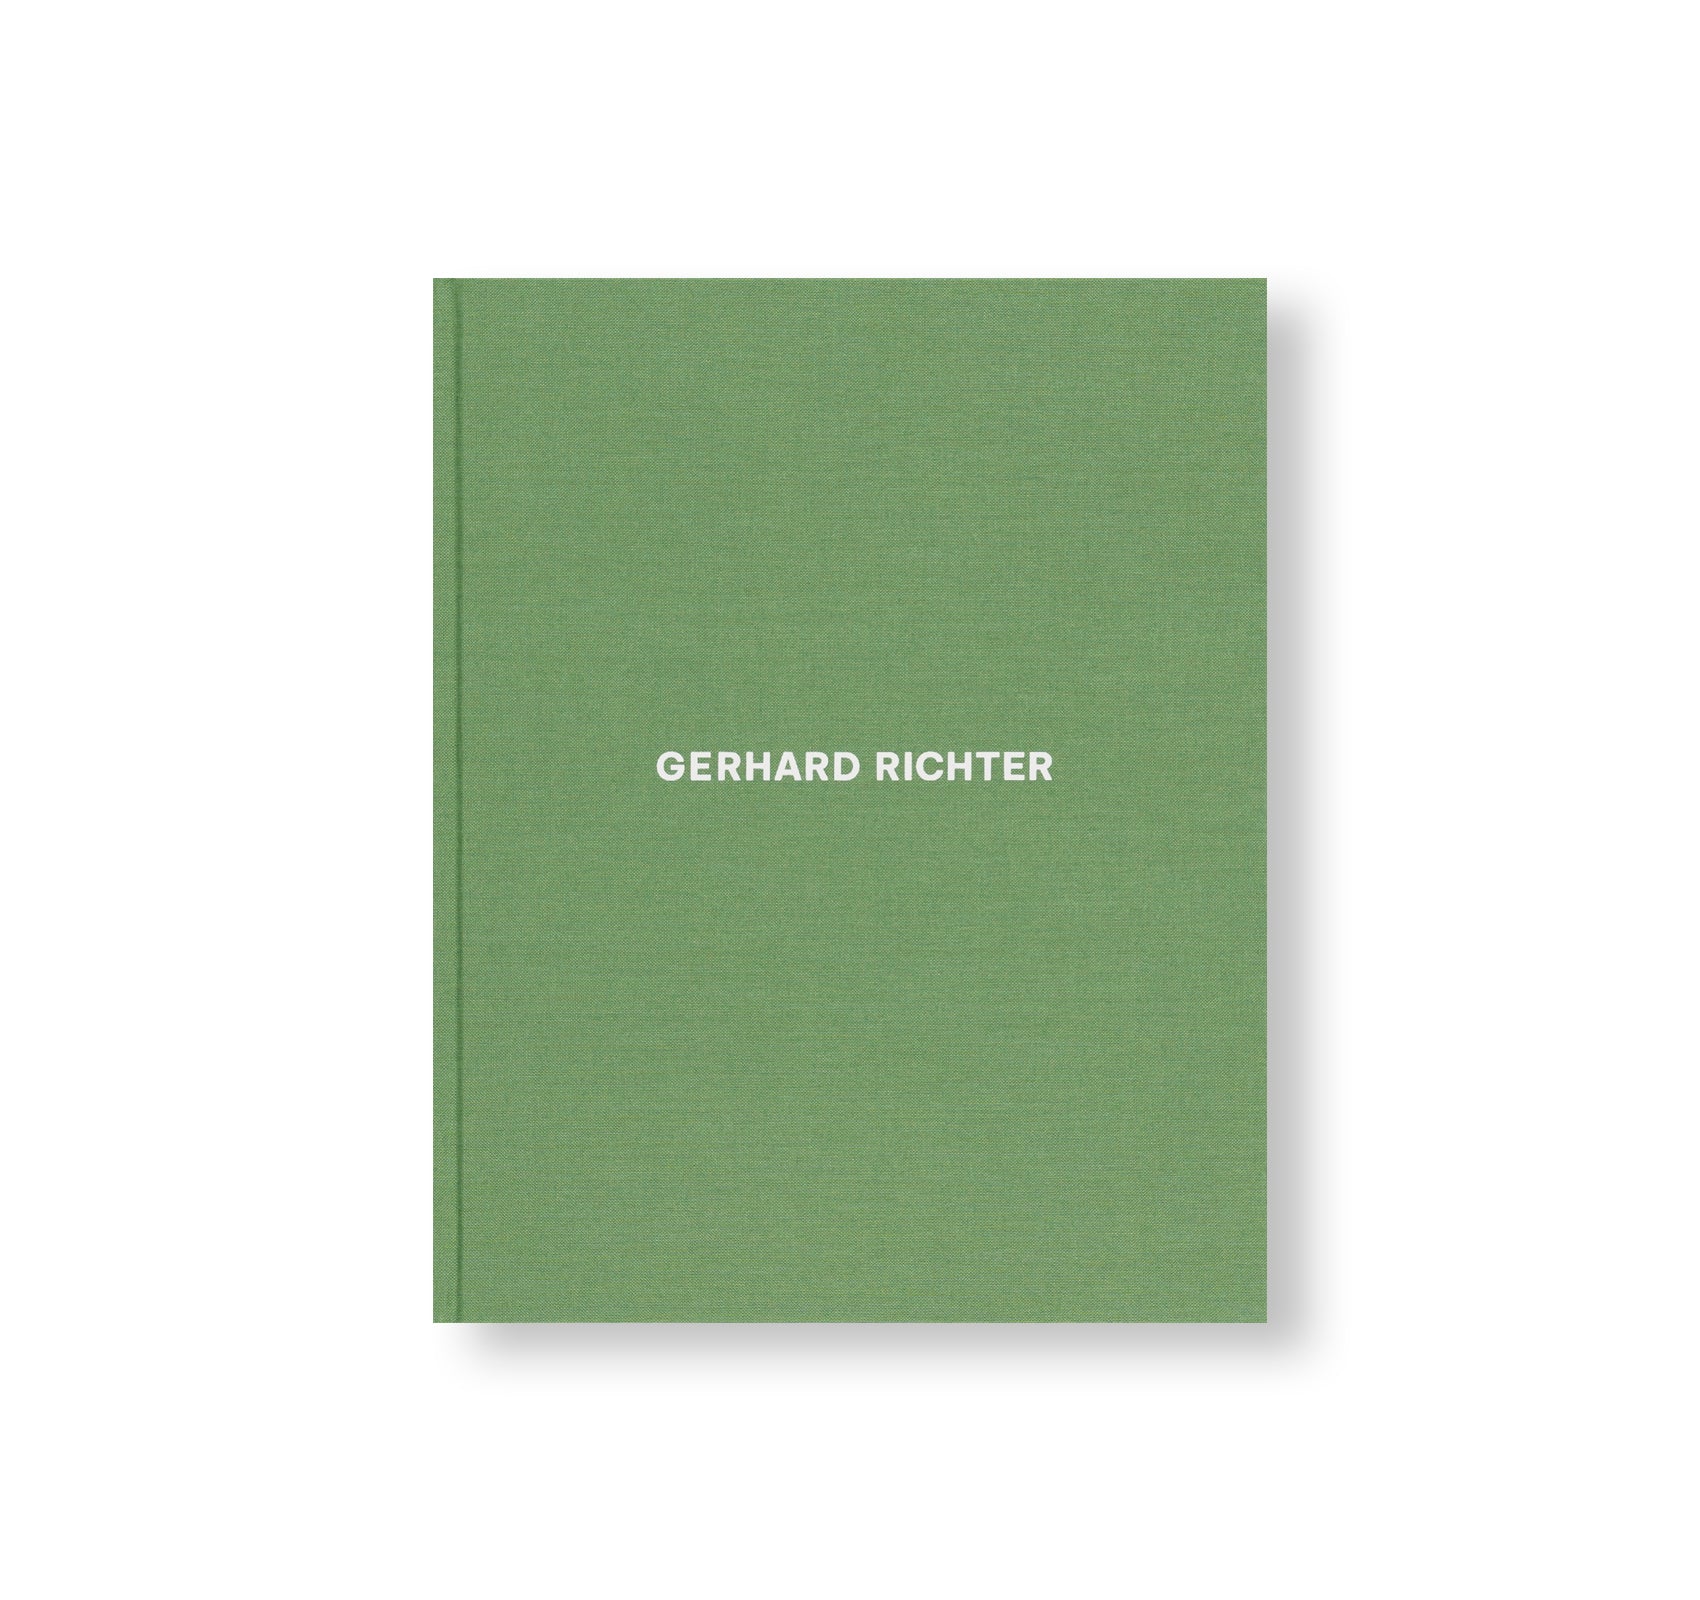 GERHARD RICHTER: NEW YORK 2023 by Gerhard Richter